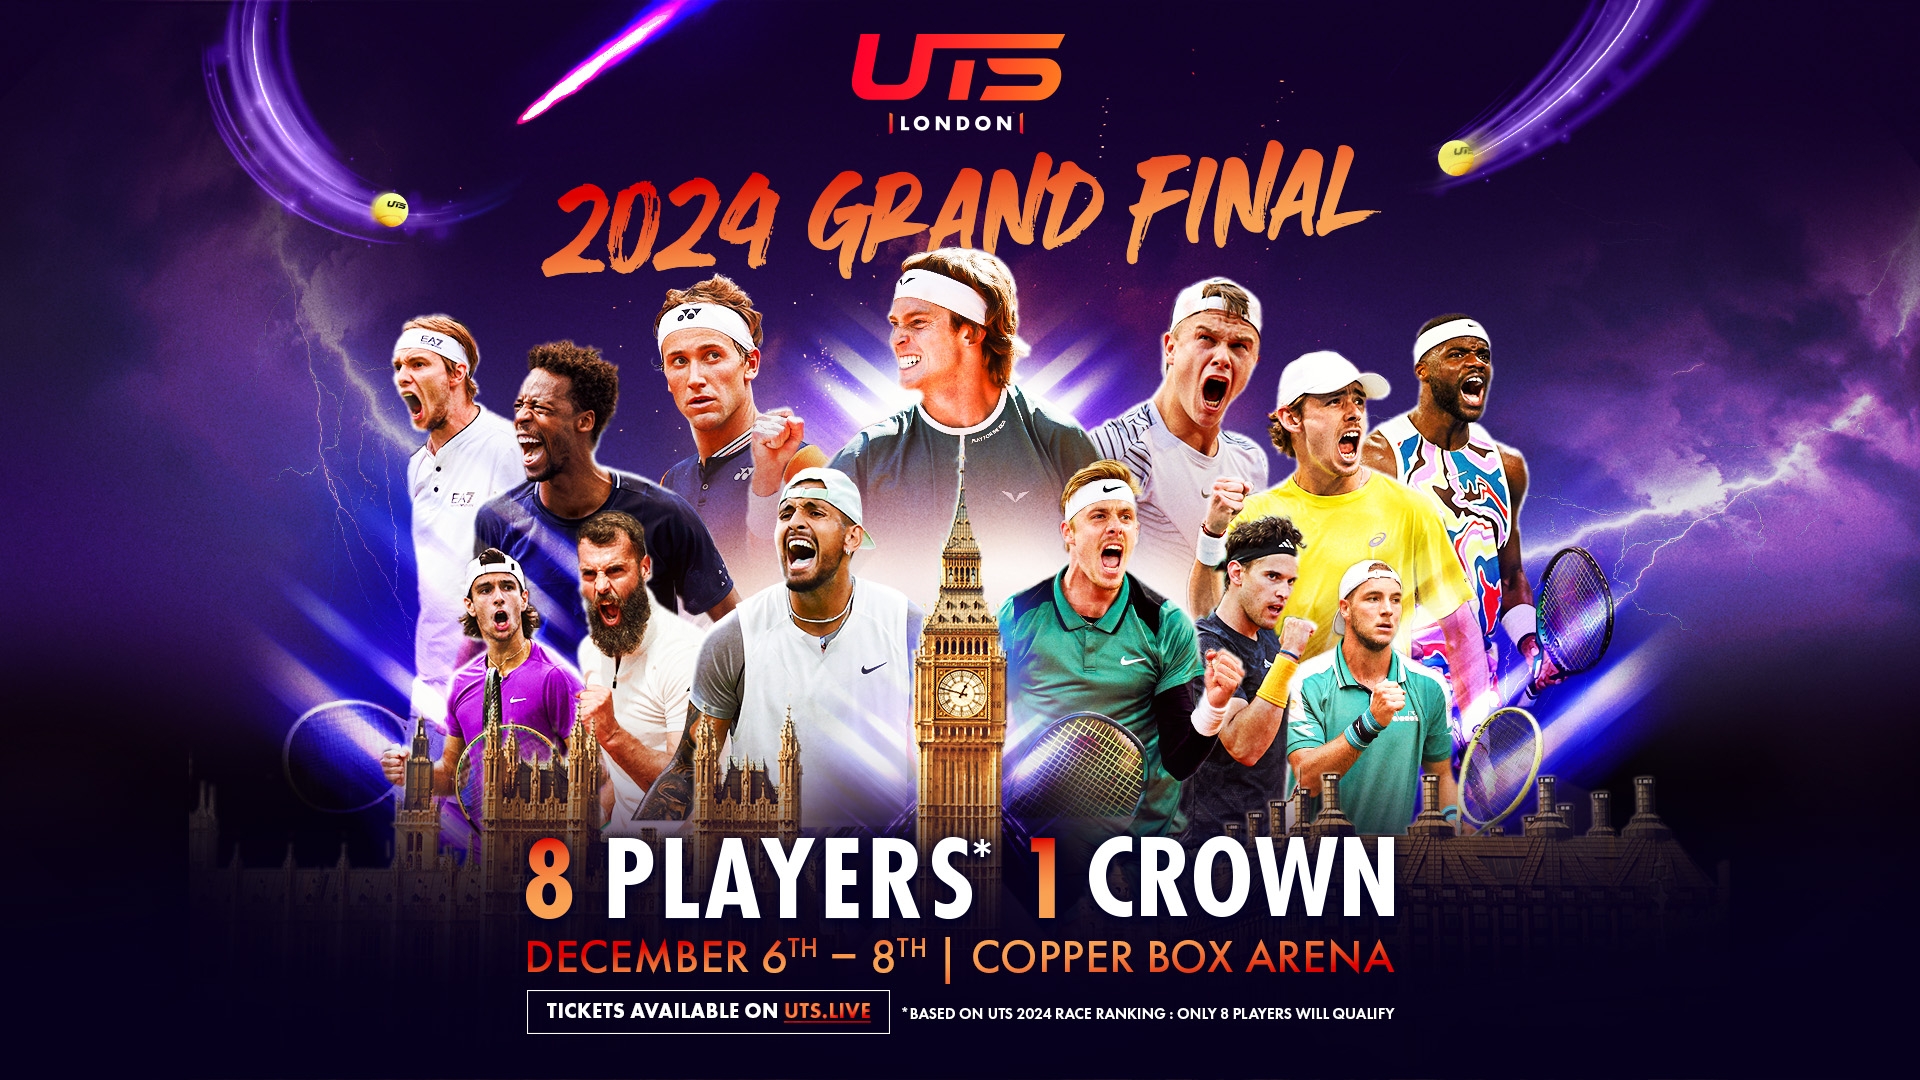 UTS Grand Final return to London in December 2024